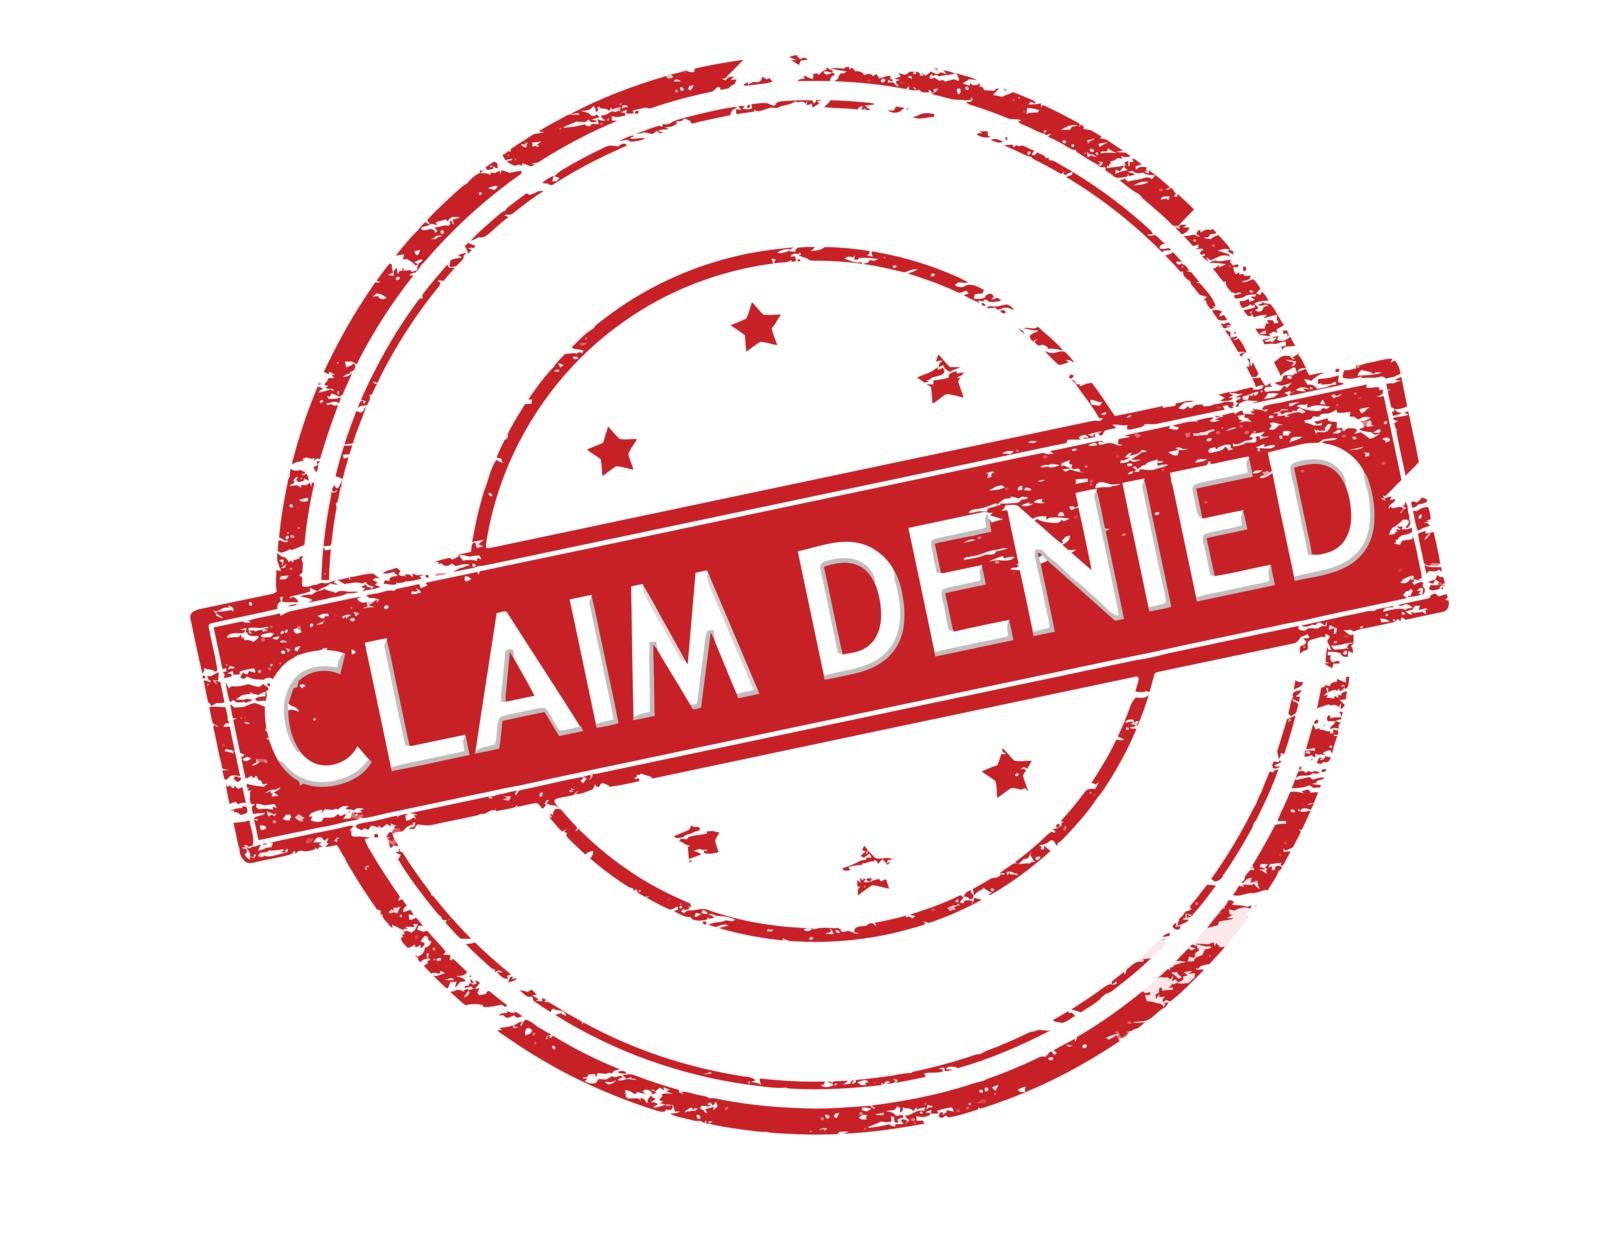 Claim denied by carmenbobo